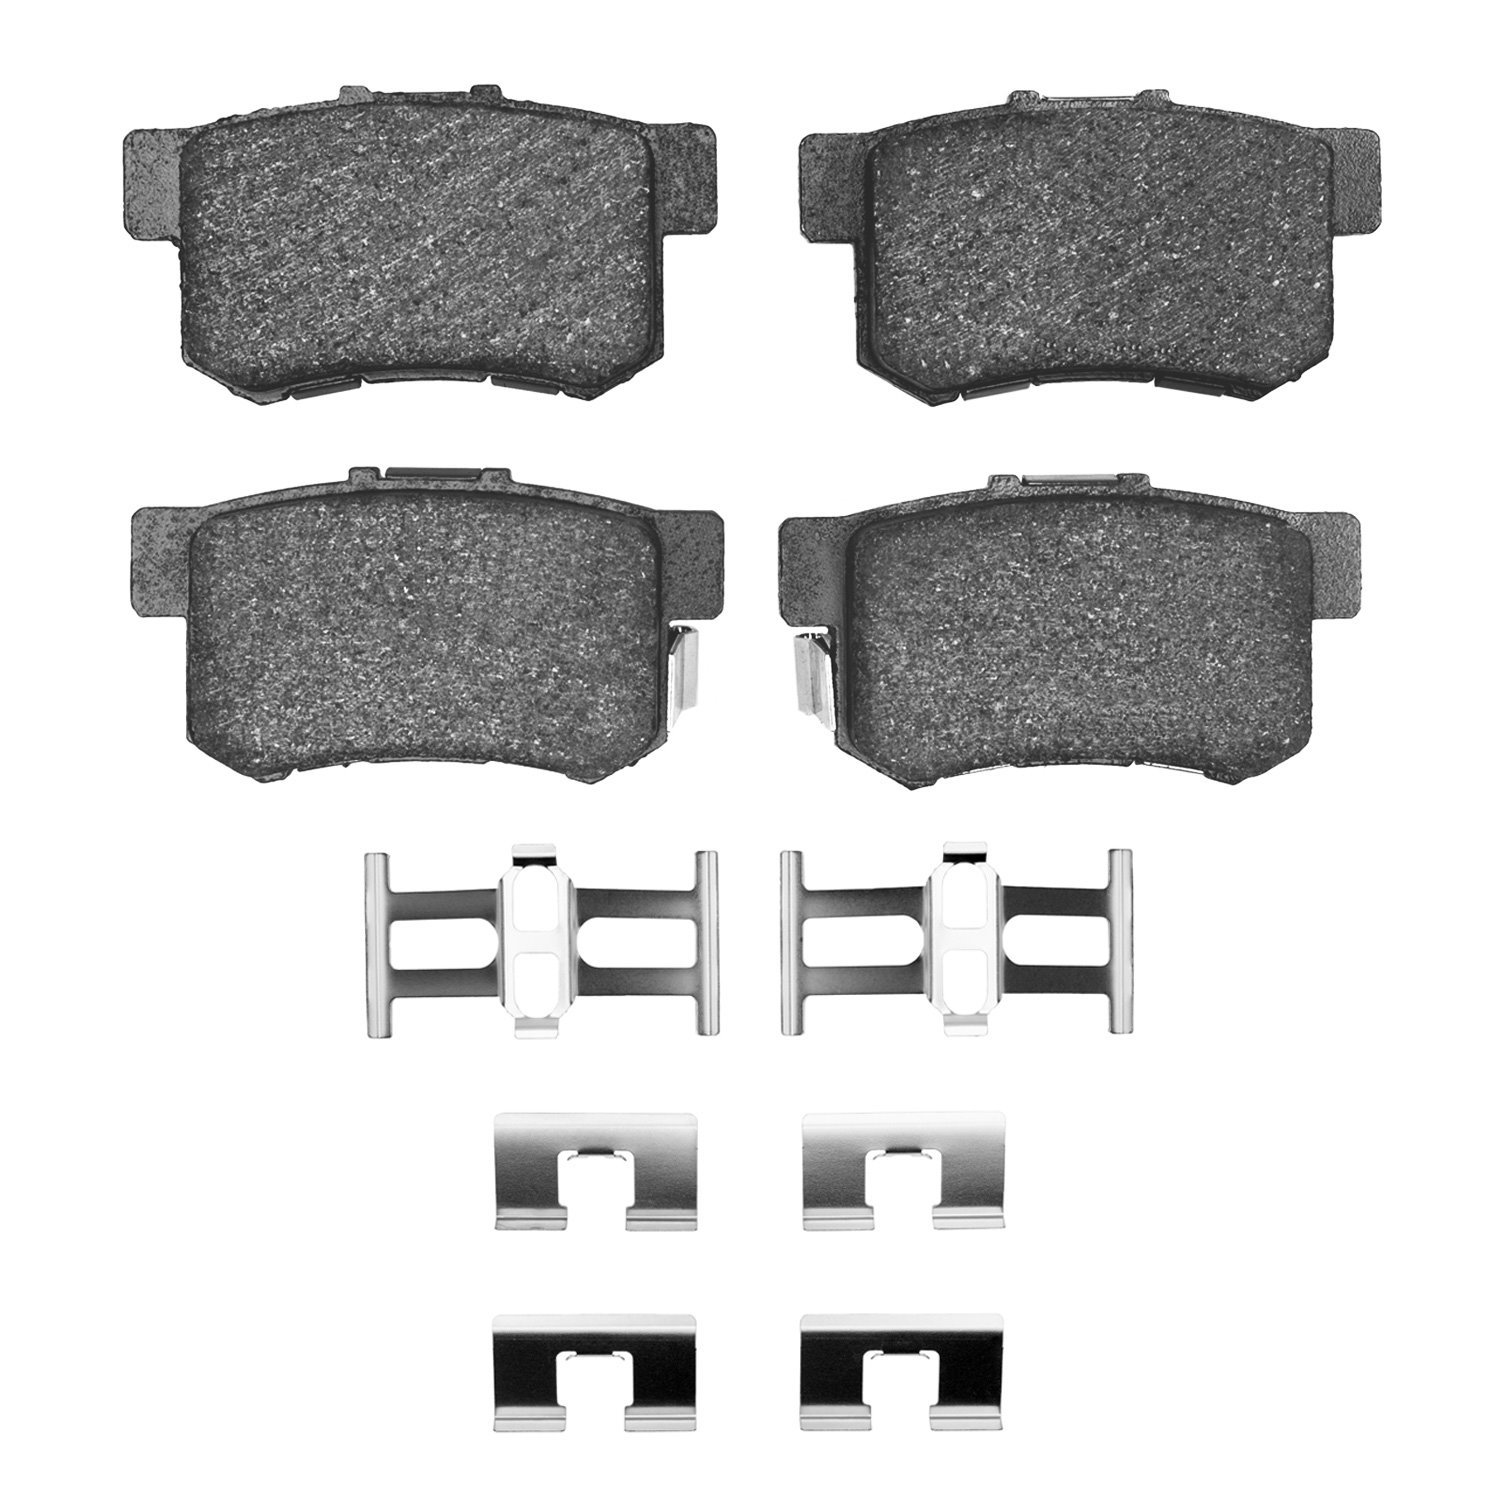 Optimum OE Brake Pads & Hardware Kit, 1991-2012 Fits Multiple Makes/Models, Position: Rear